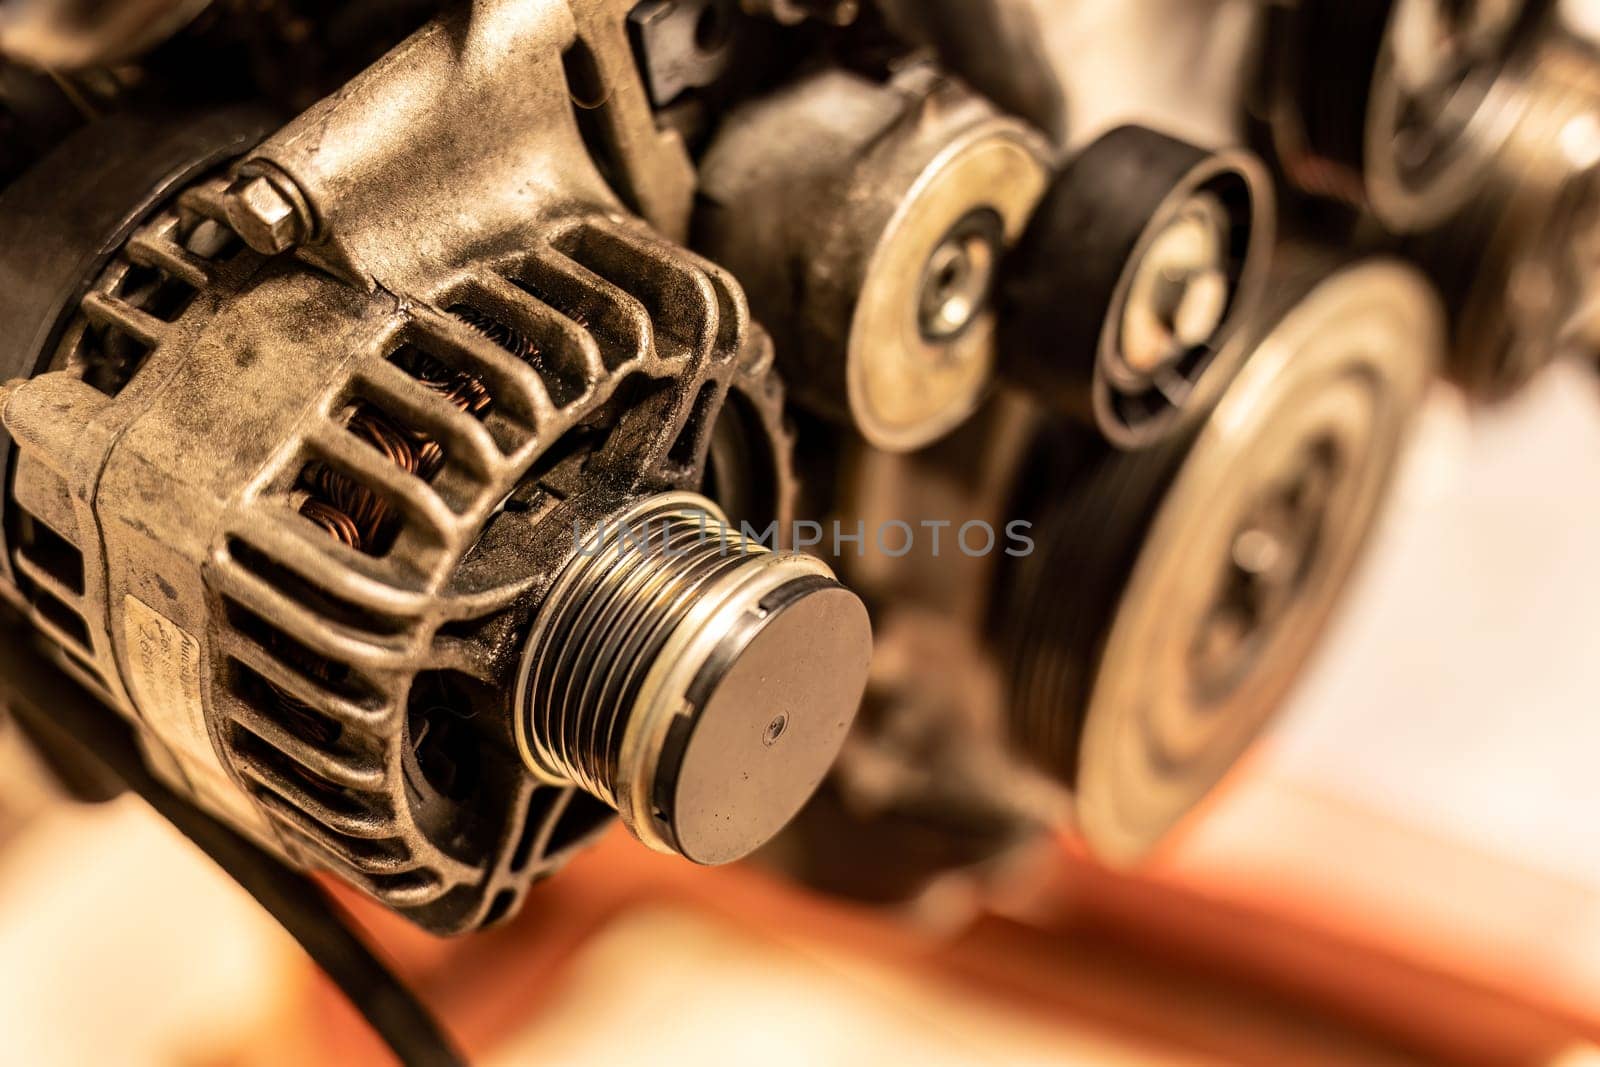 Alternator Pulley on Car Engine by pippocarlot